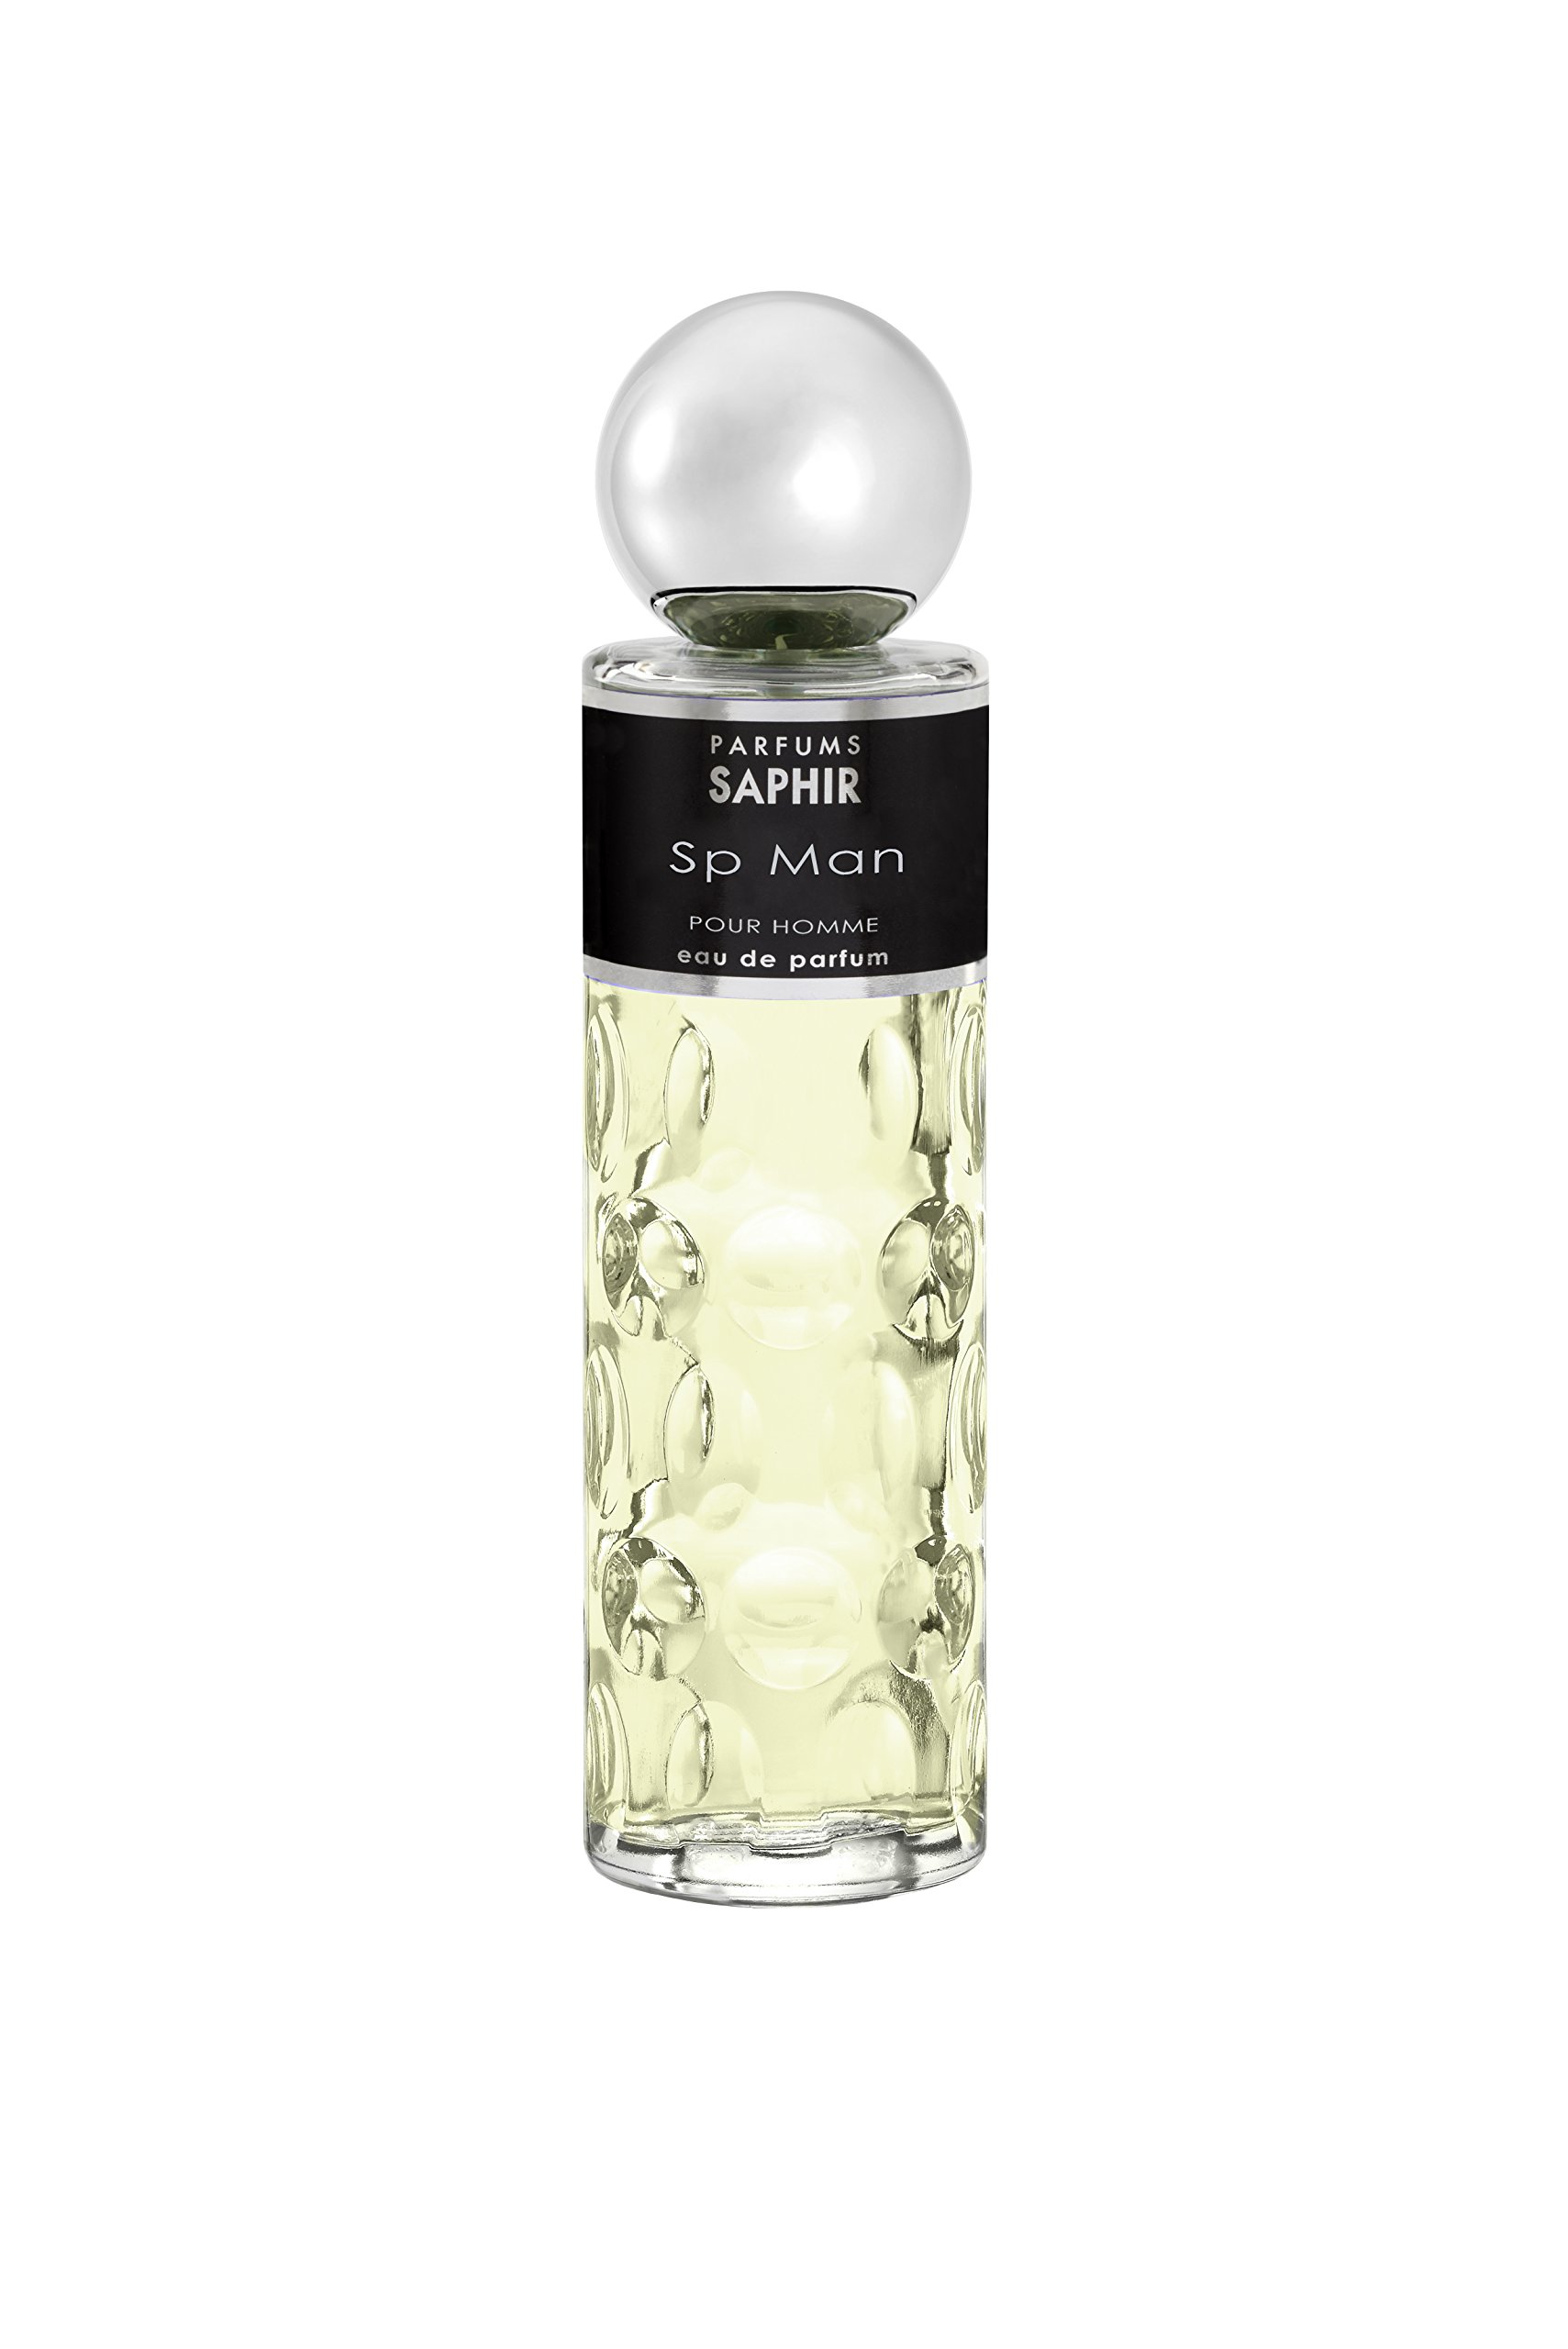 Image of Parfums Saphir - Eau de Parfum 200 ml - sp man